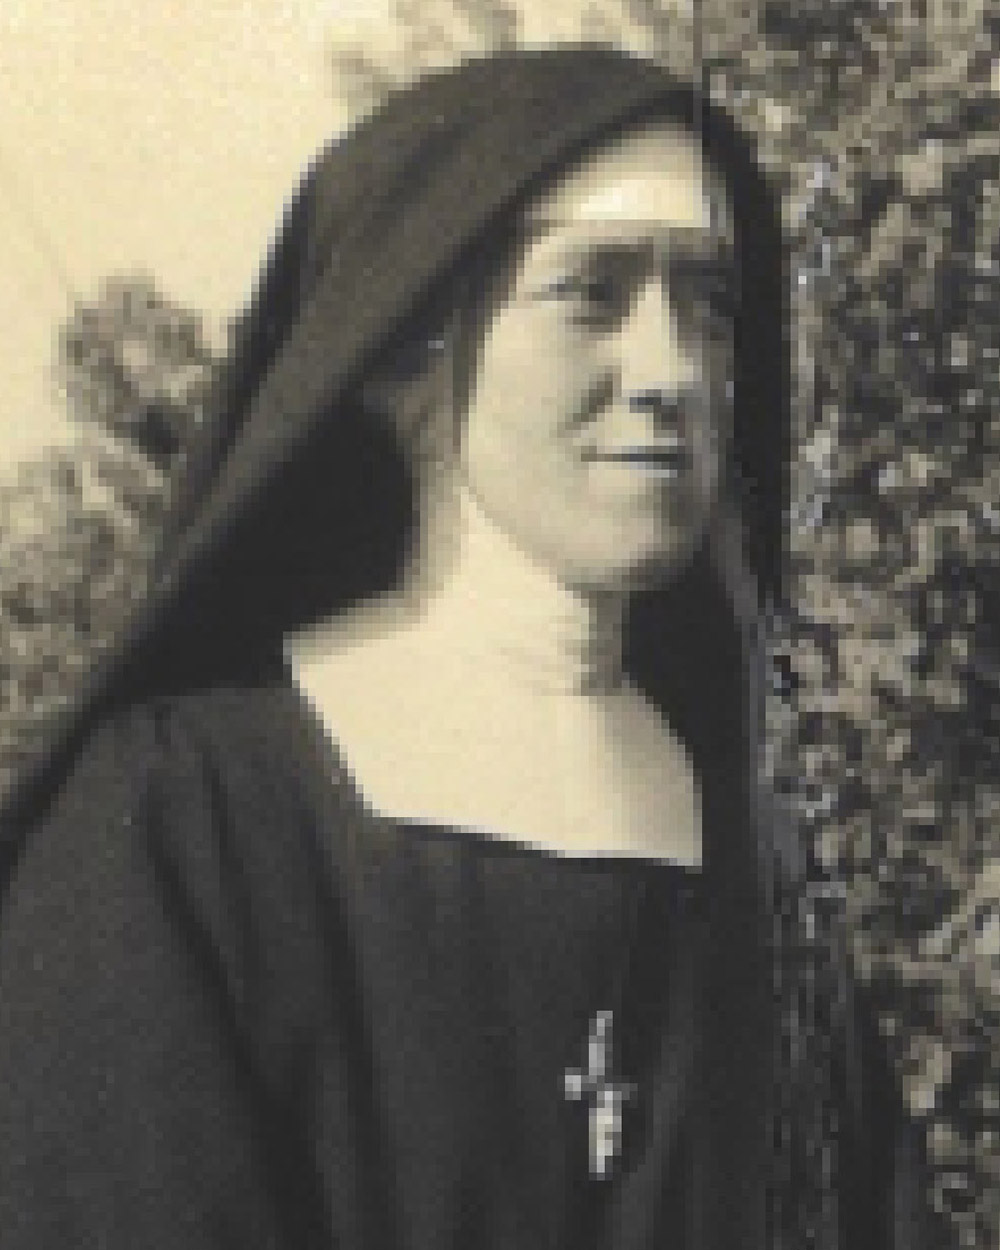 Sister-M.-Emilia-Wojciak-OSF-1904-1968